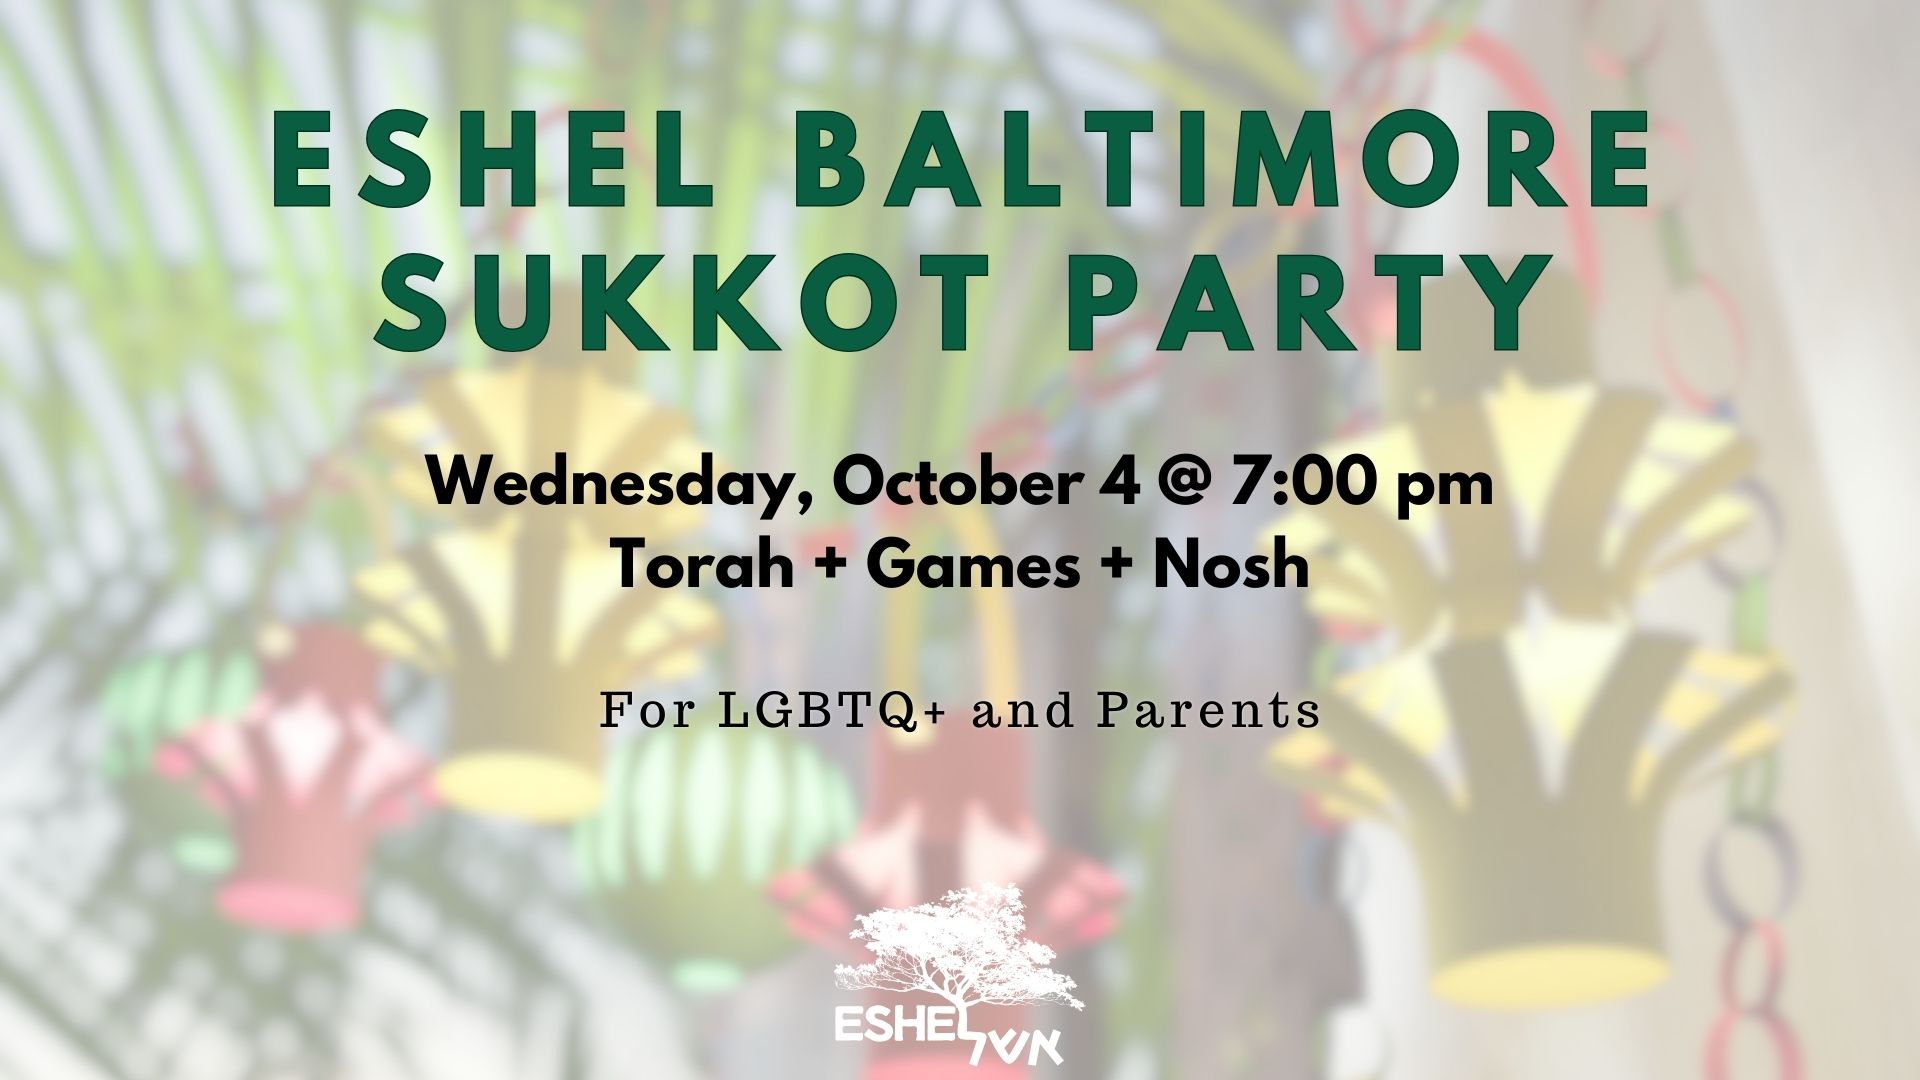 Eshel Baltimore Sukkot Party: Wednesday, October 4 @ 7:00 pm | Torah + Games + Nosh | For LGBTQ+ and Parents